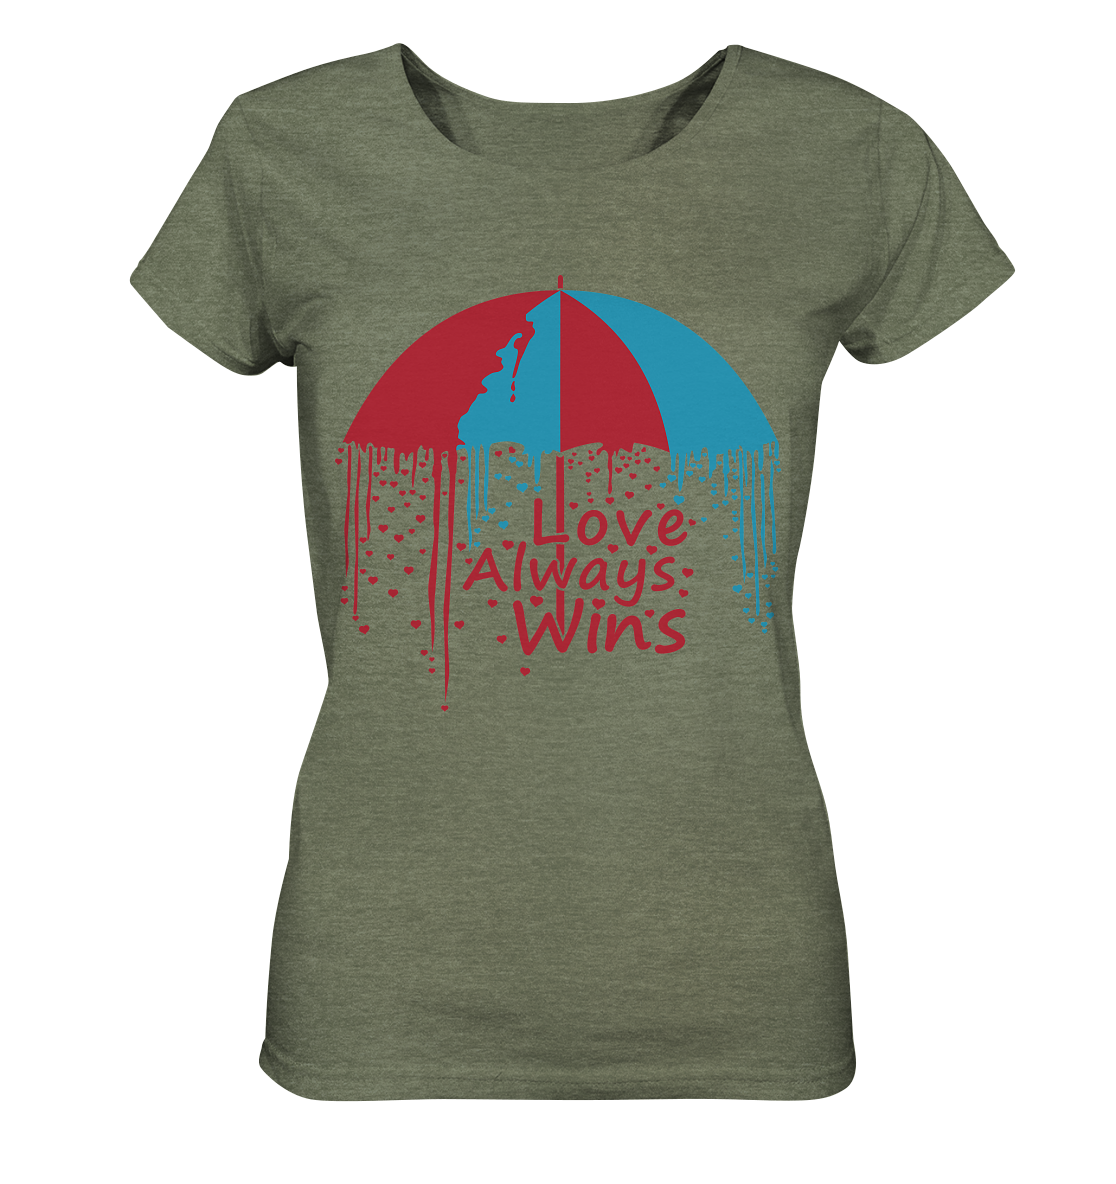 Love always wins - Ladies Organic Shirt (mottled)